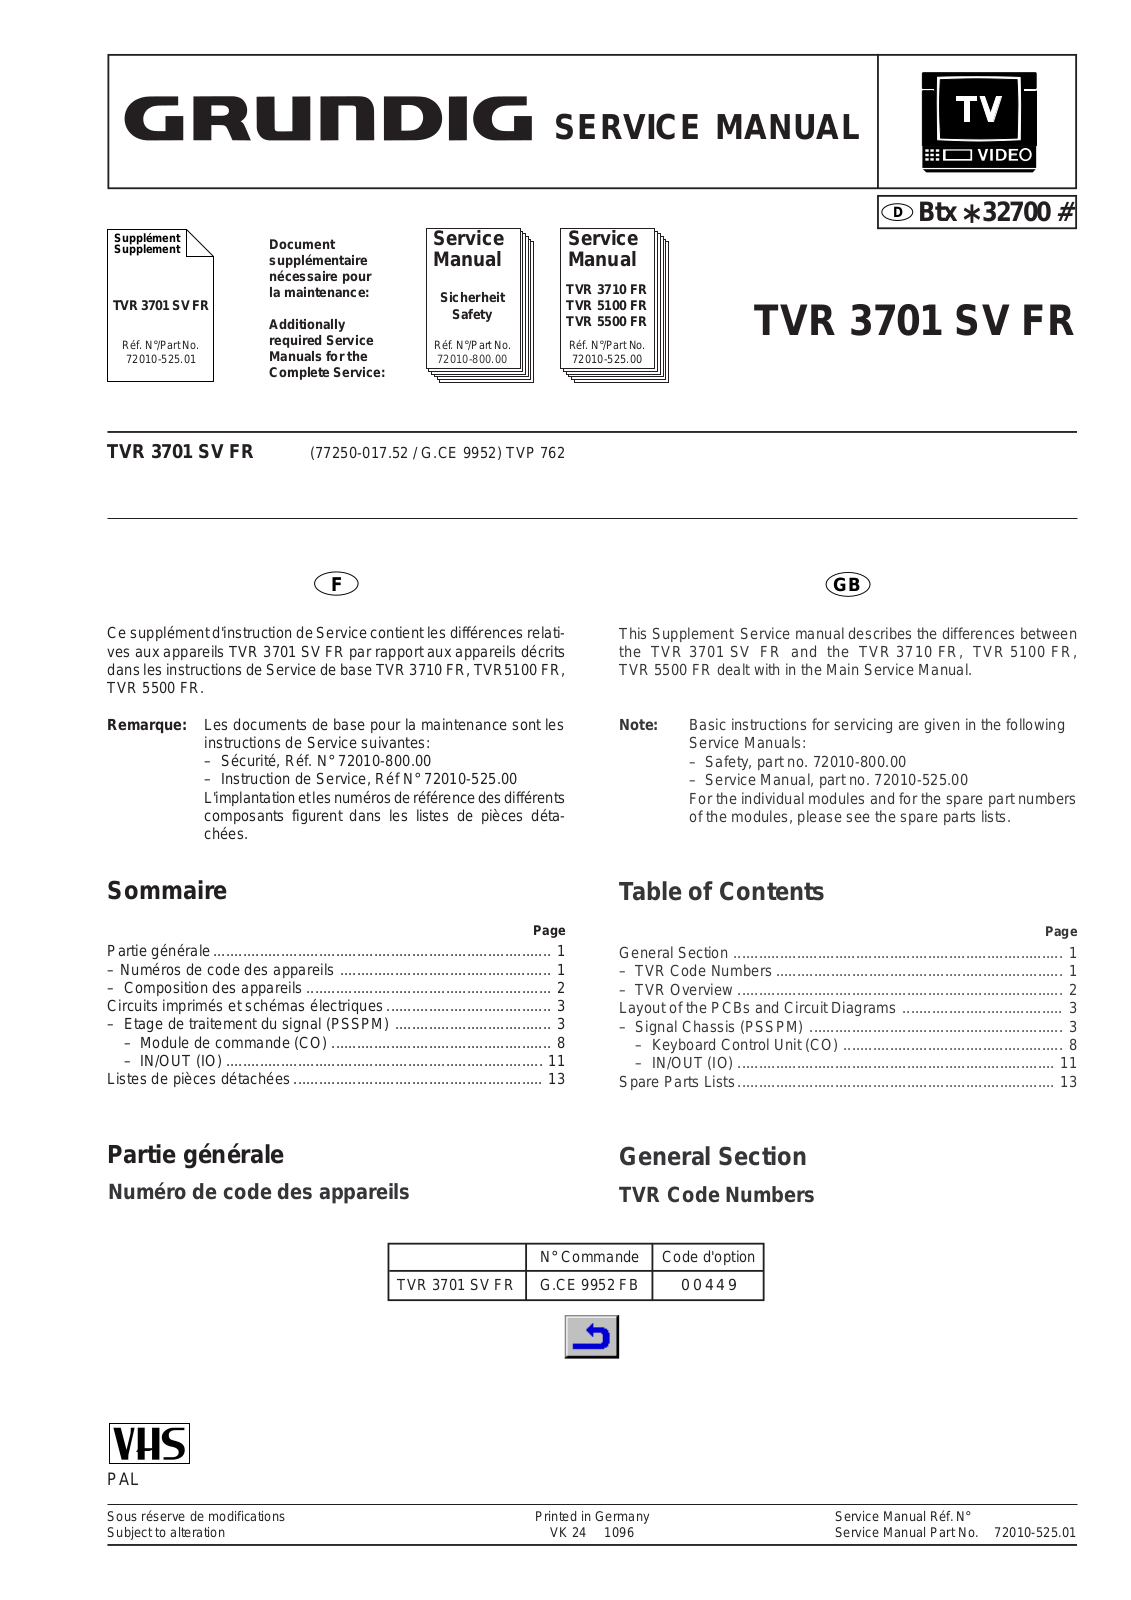 GRUNDIG TVR 3701 SV FR Service Manual